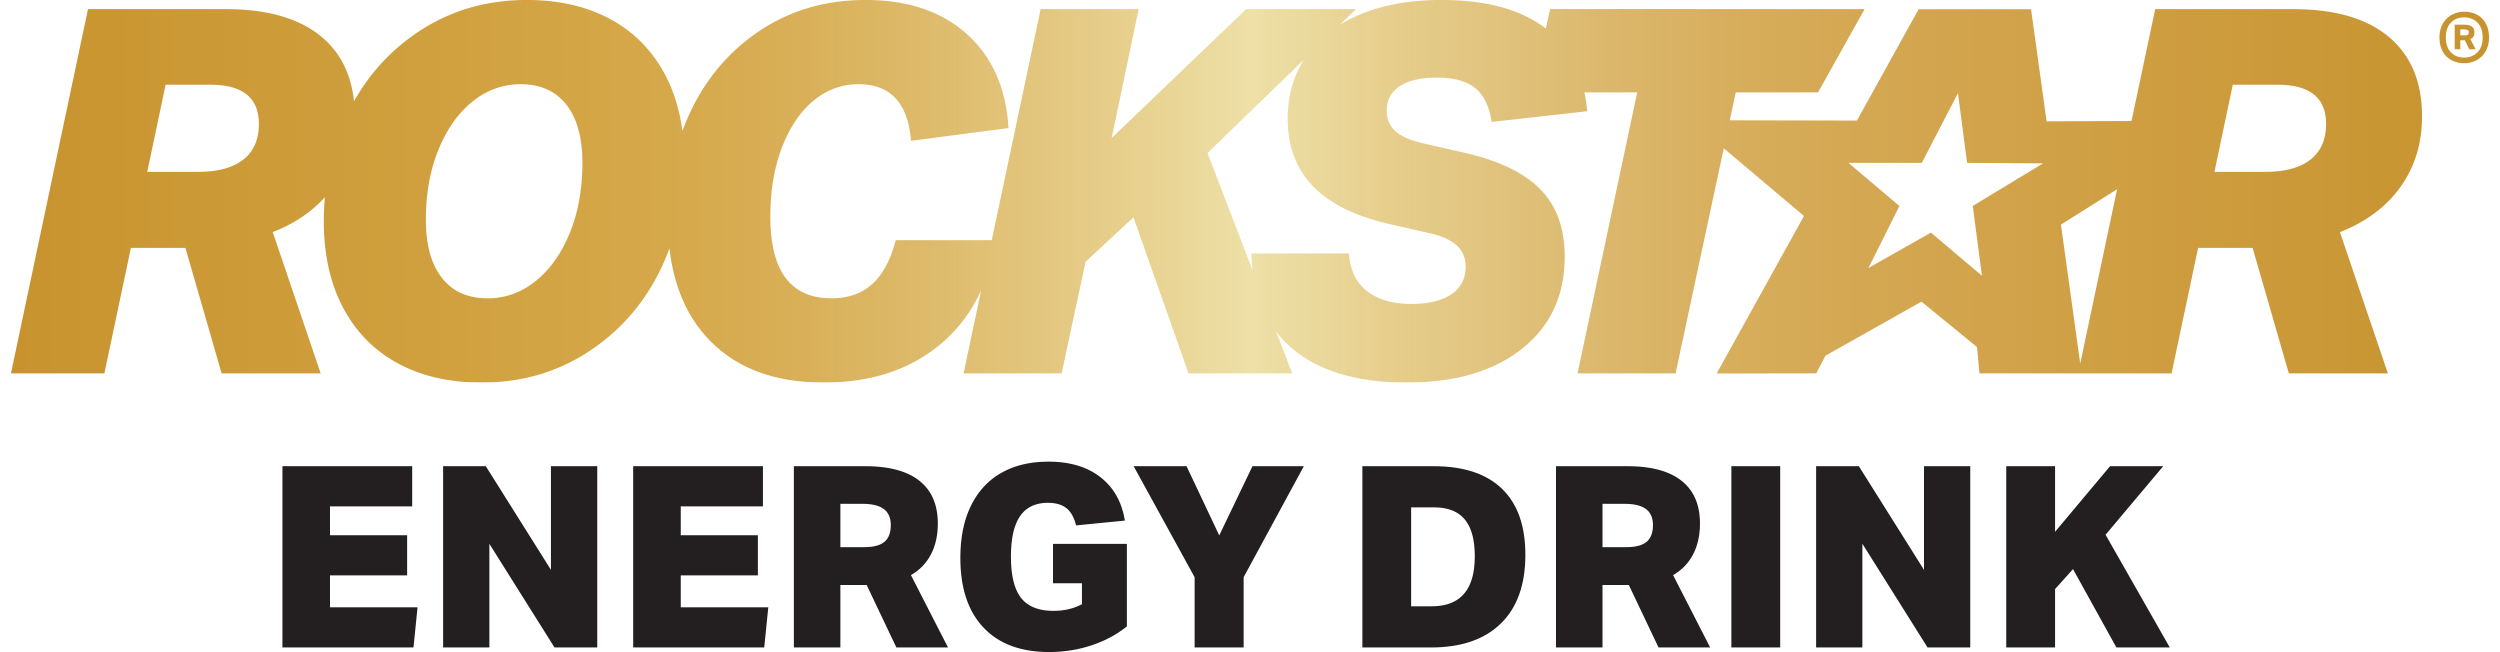 Rockstar-Text-Logo-2021-Gold-White.png